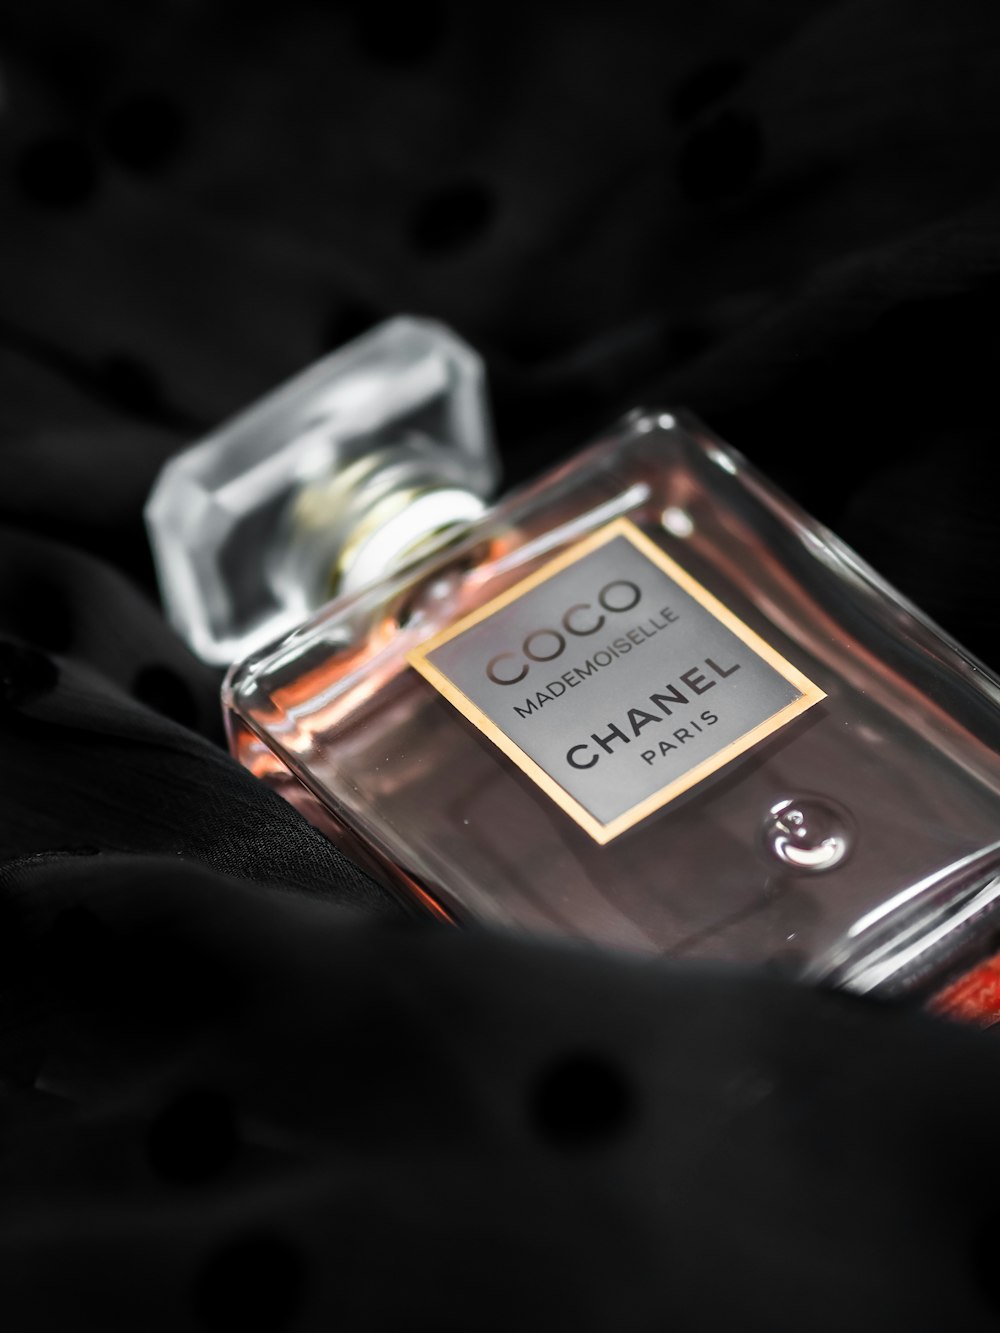 500+ Fragrance Pictures  Download Free Images on Unsplash